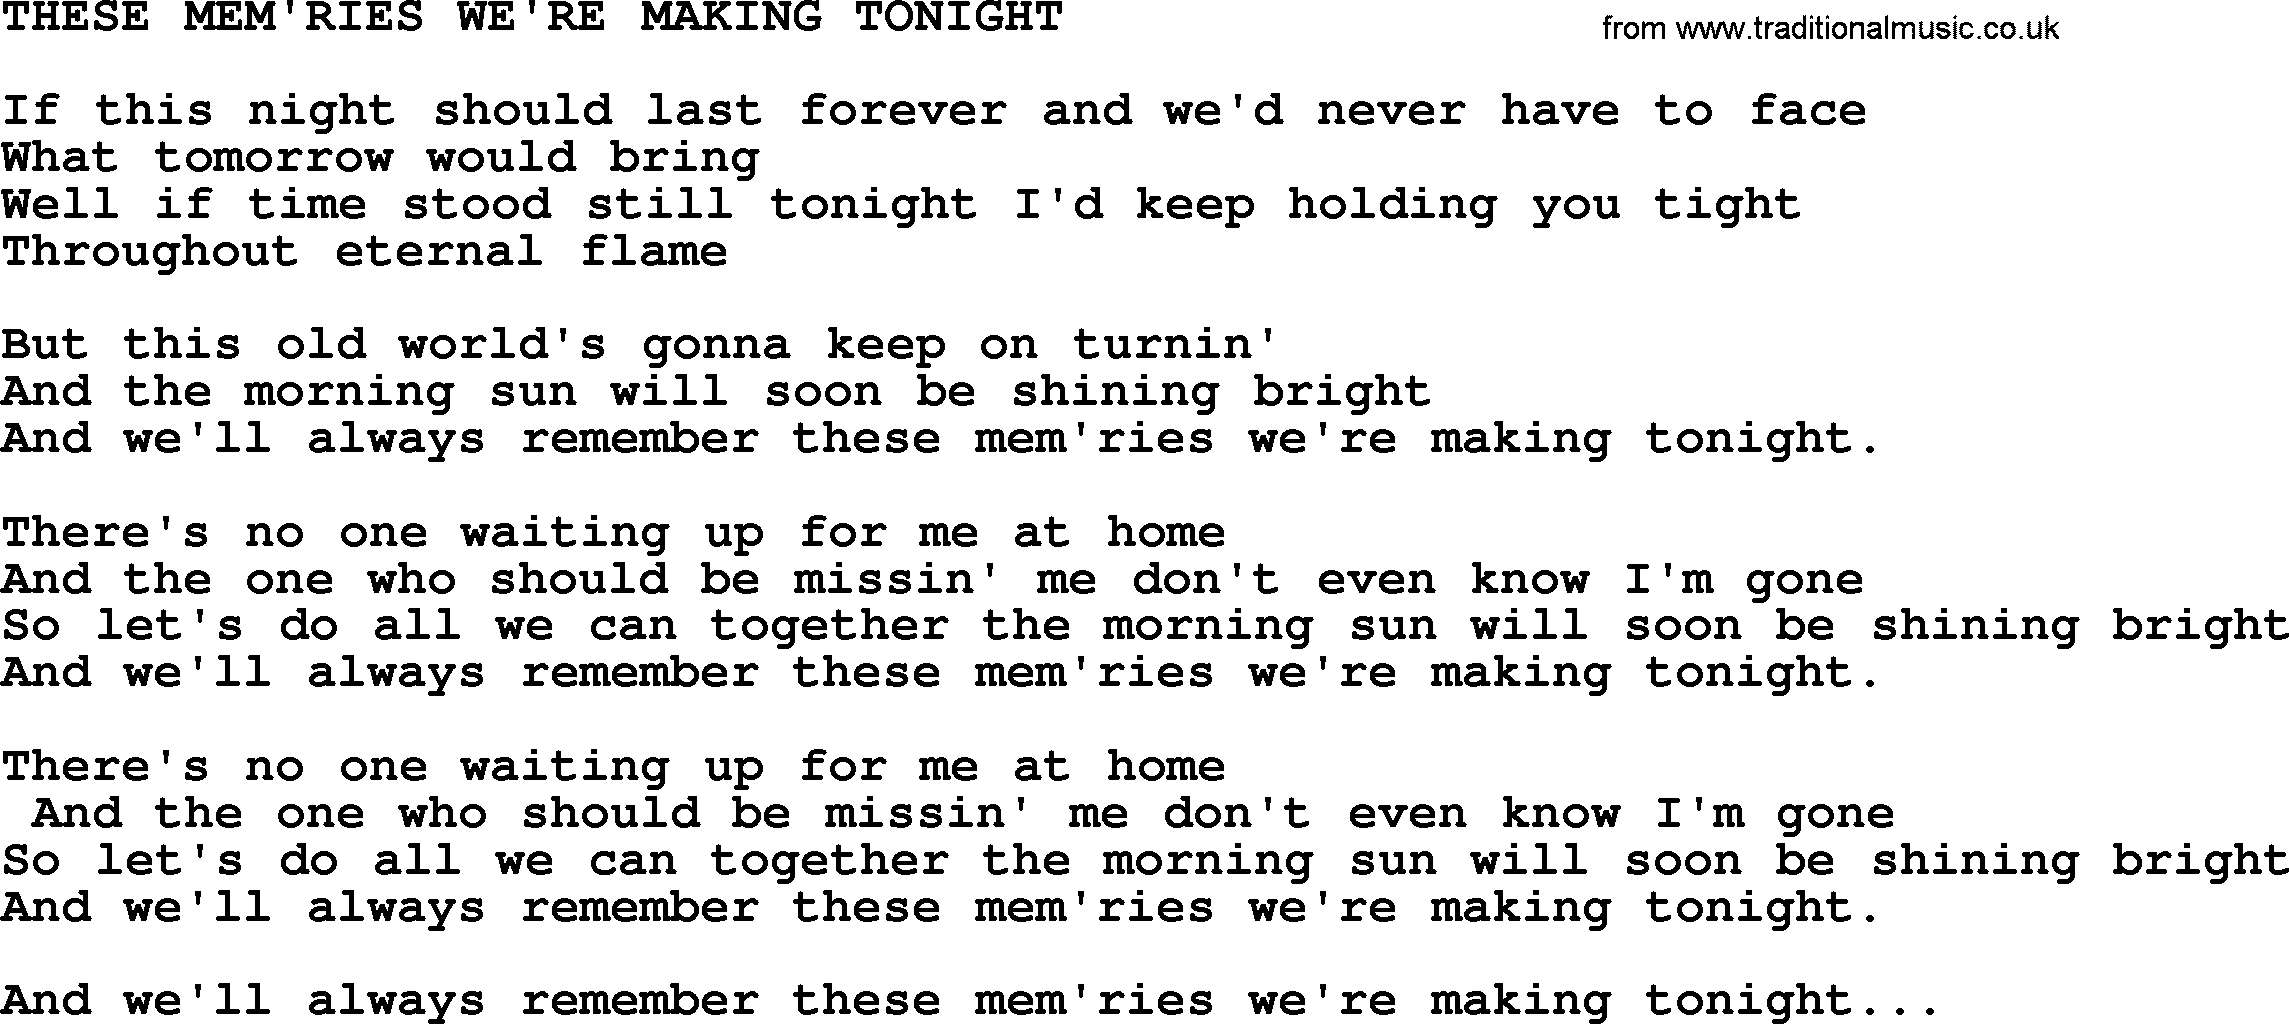 Merle Haggard song: These Mem'ries We're Making Tonight, lyrics.